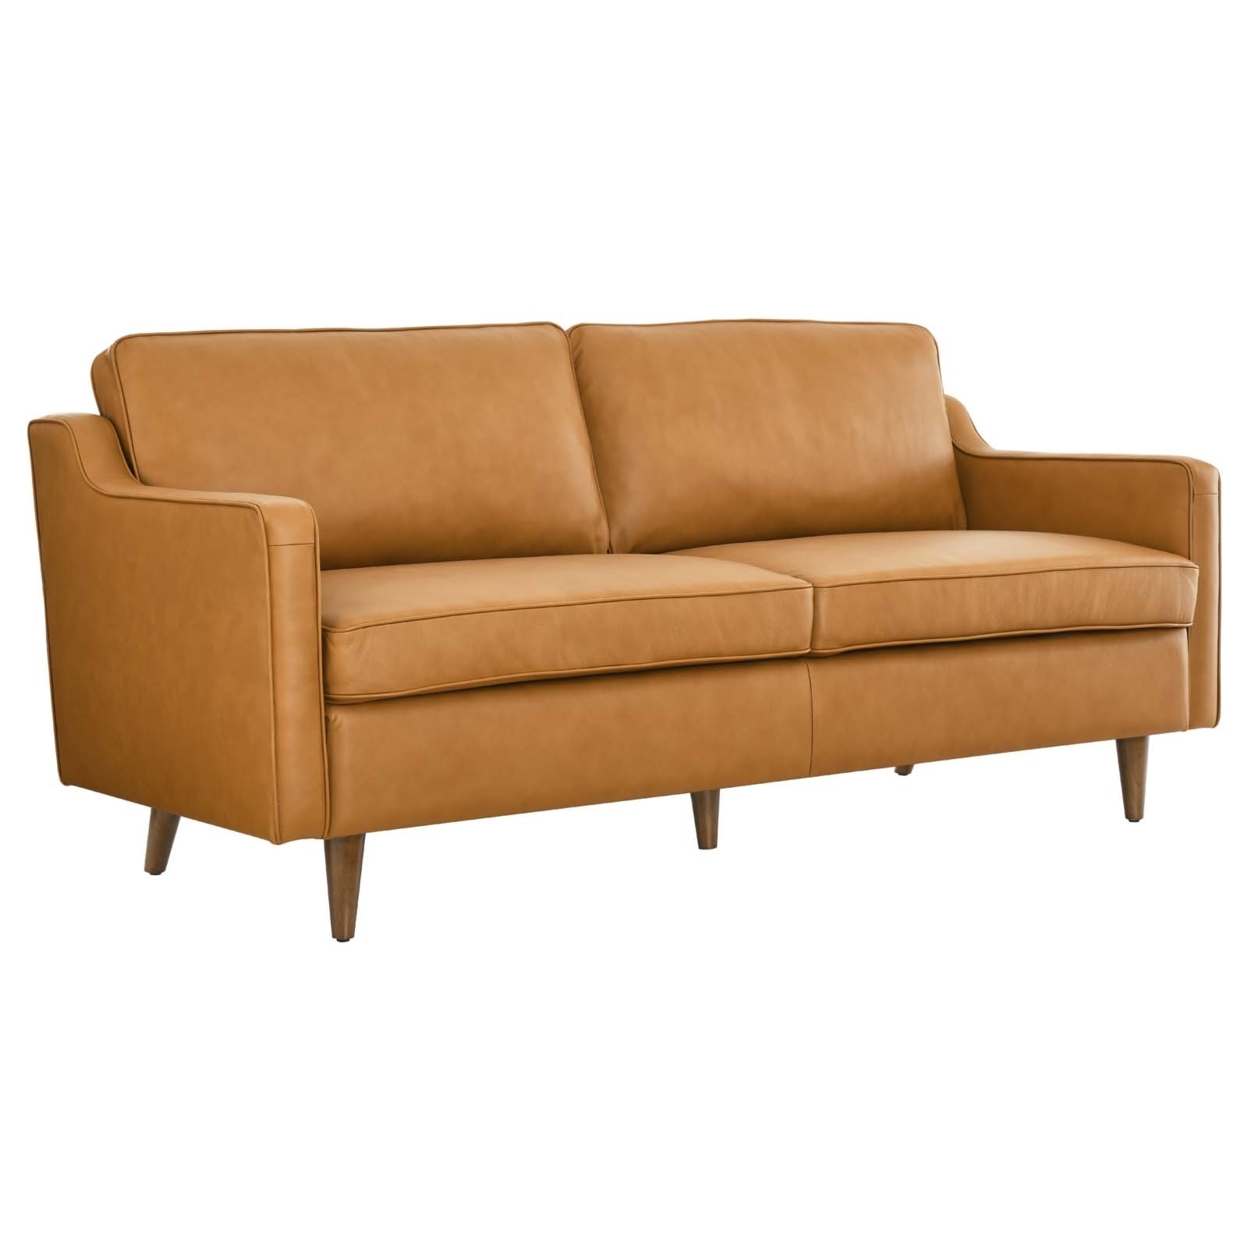 Impart Genuine Leather Sofa, Tan